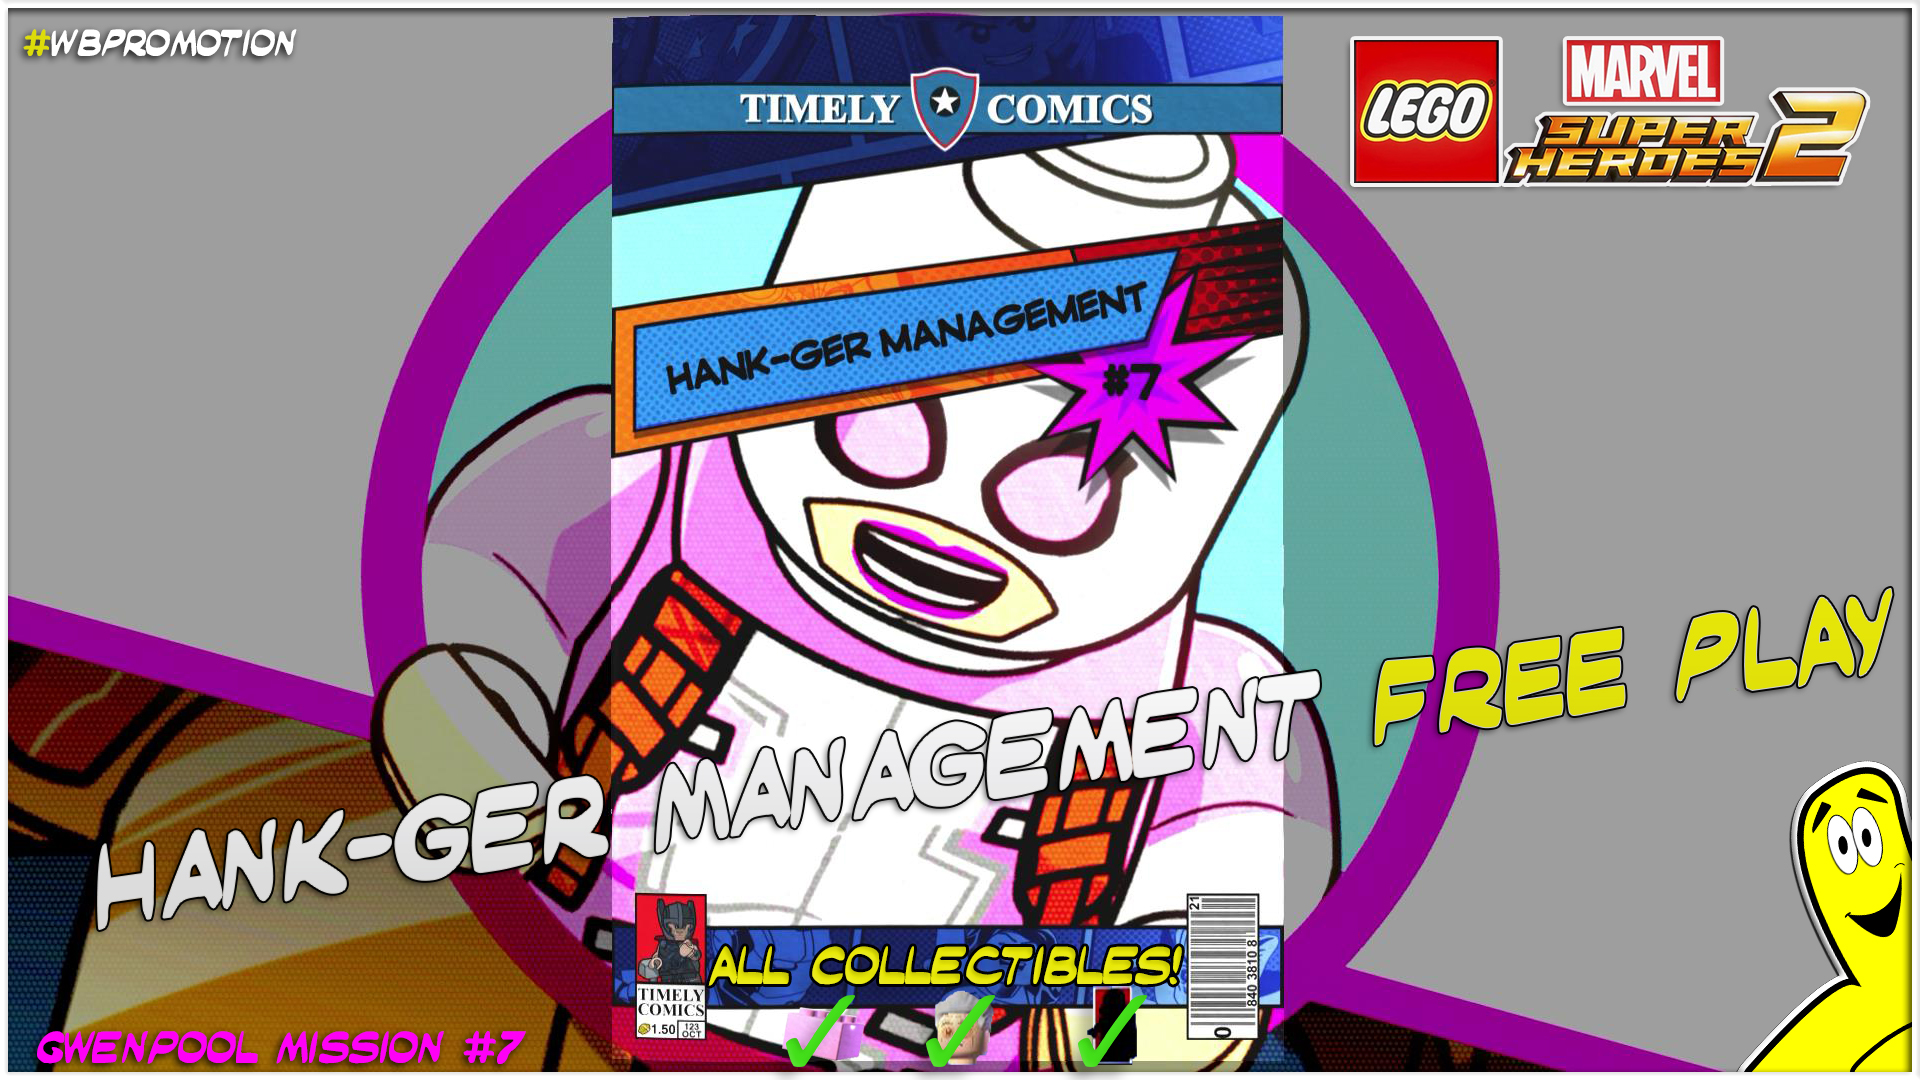 Lego Marvel Superheroes 2: Gwenpool Mission 7 / Hank-ger Management FREE PLAY – HTG